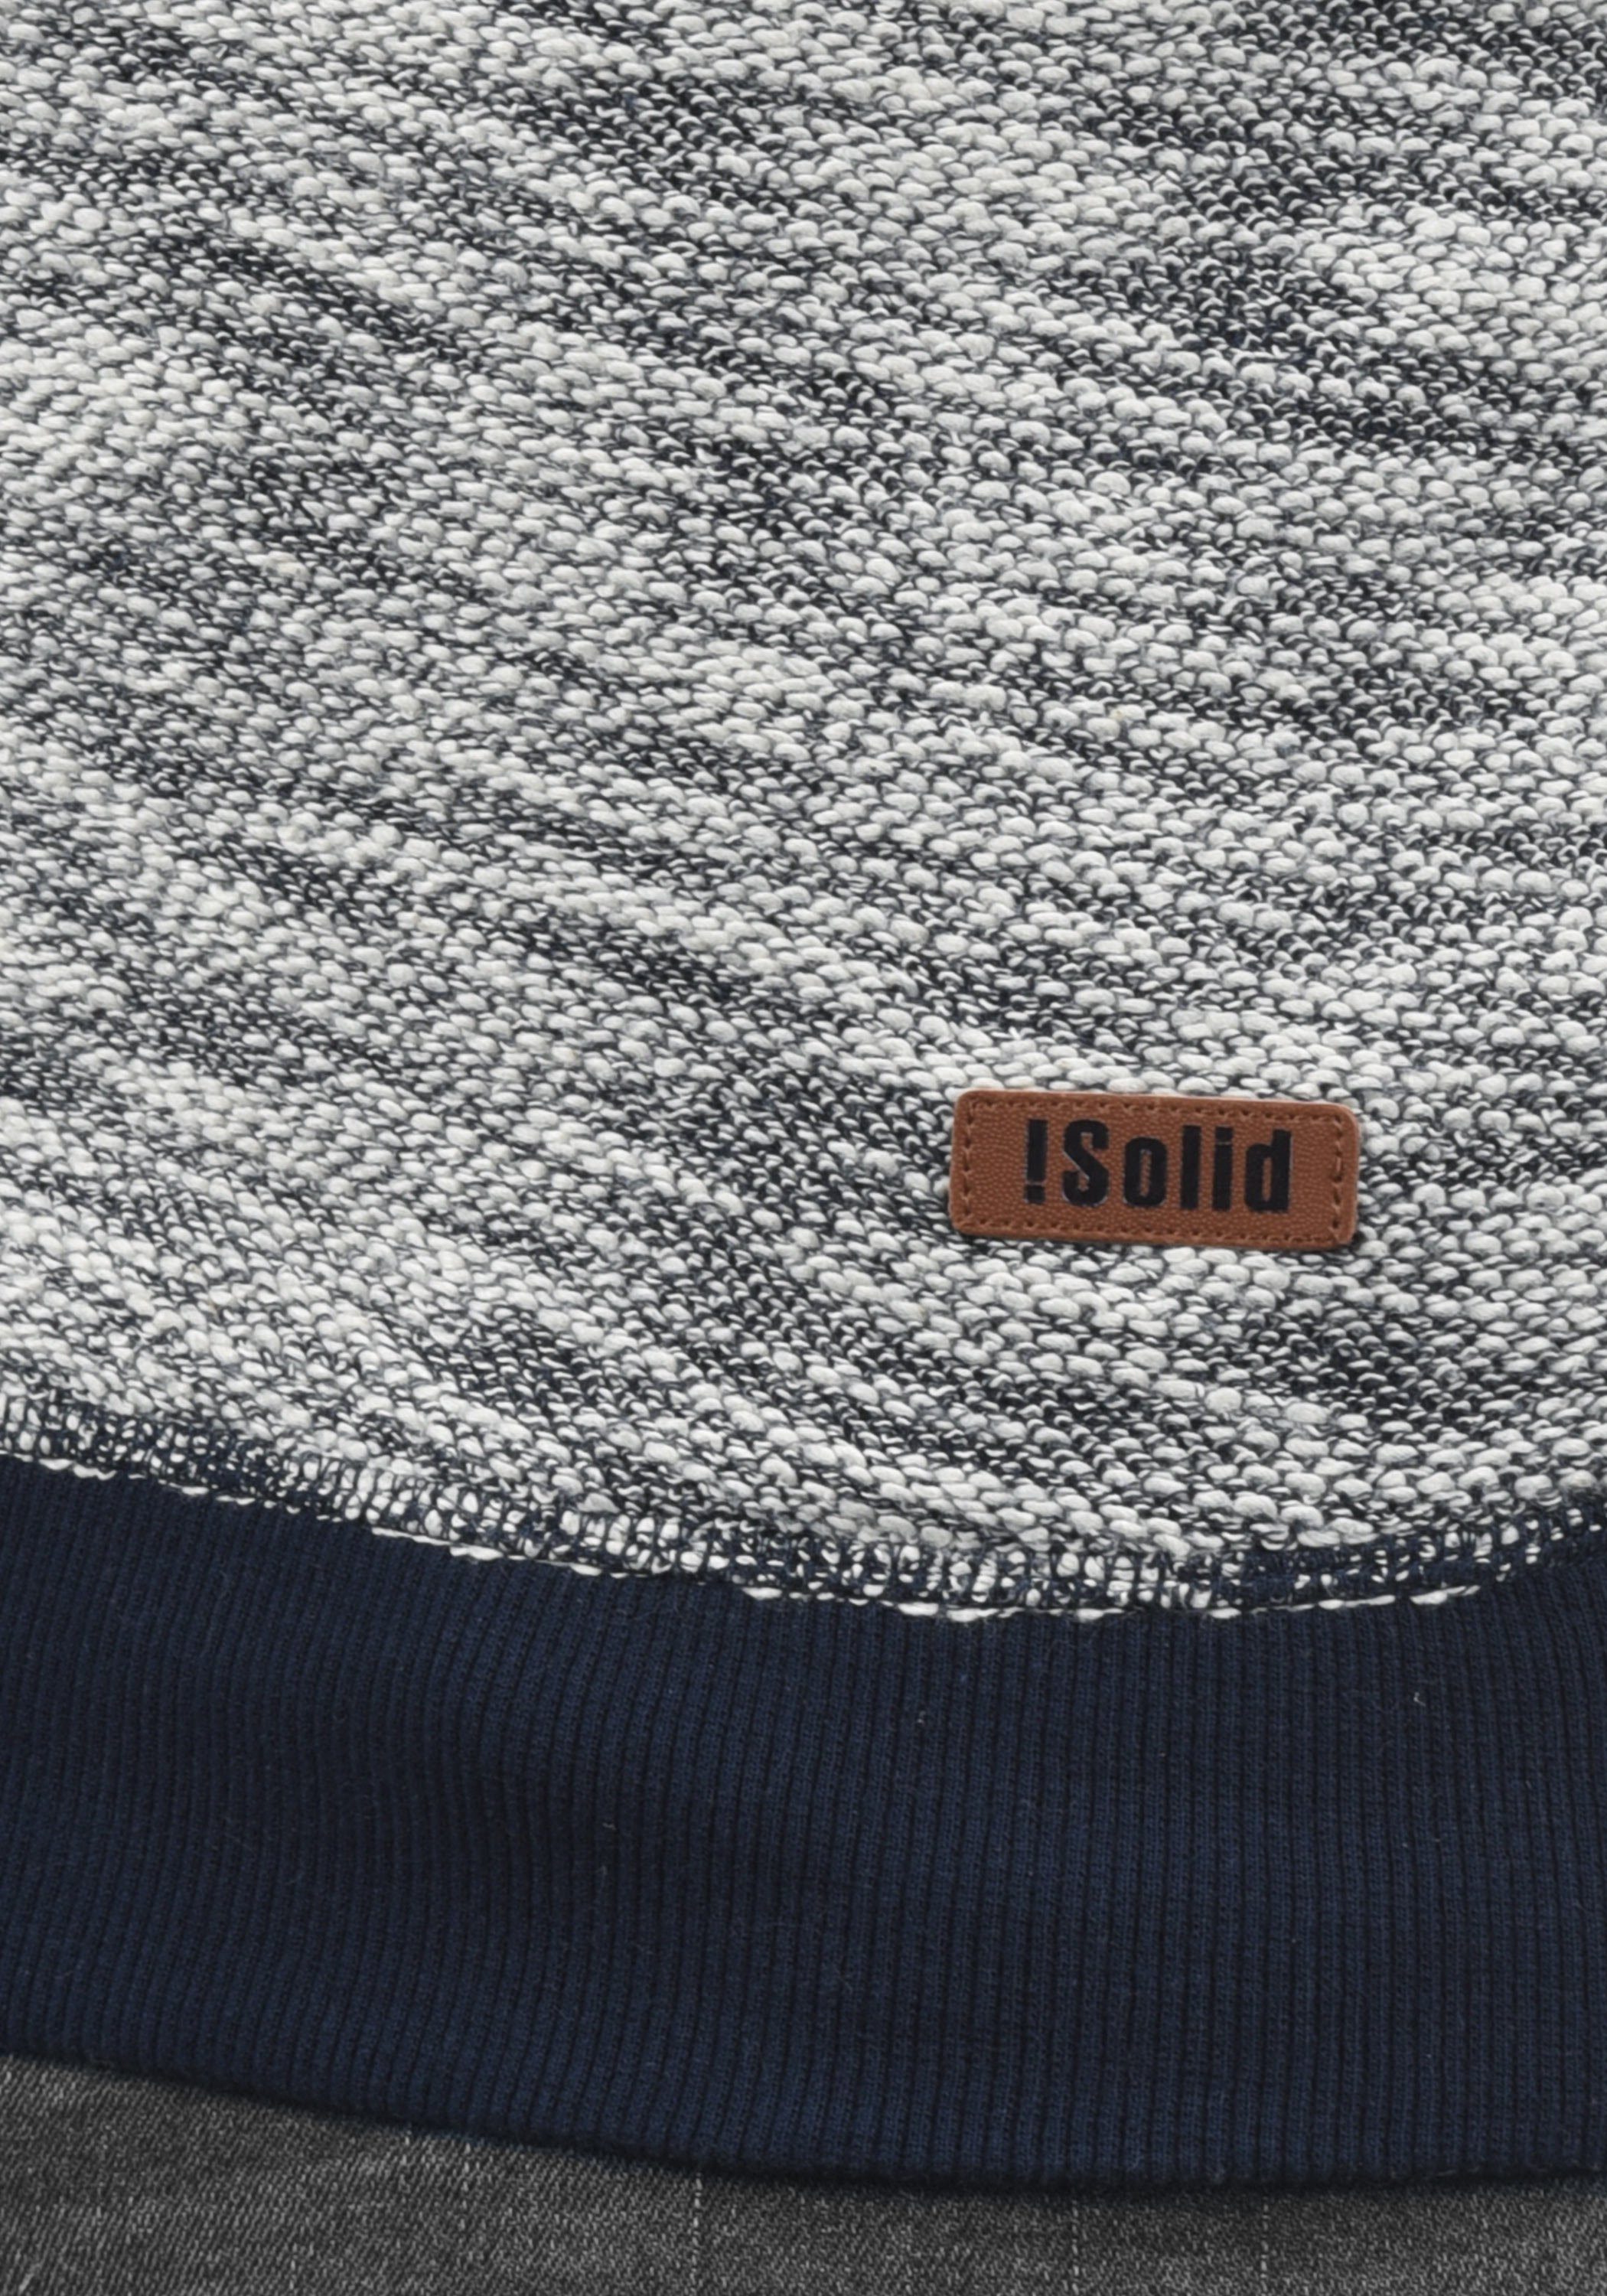 Baseball-Look Sweatshirt !Solid Blue im Insignia Sweatpullover (1991) SDFlocker